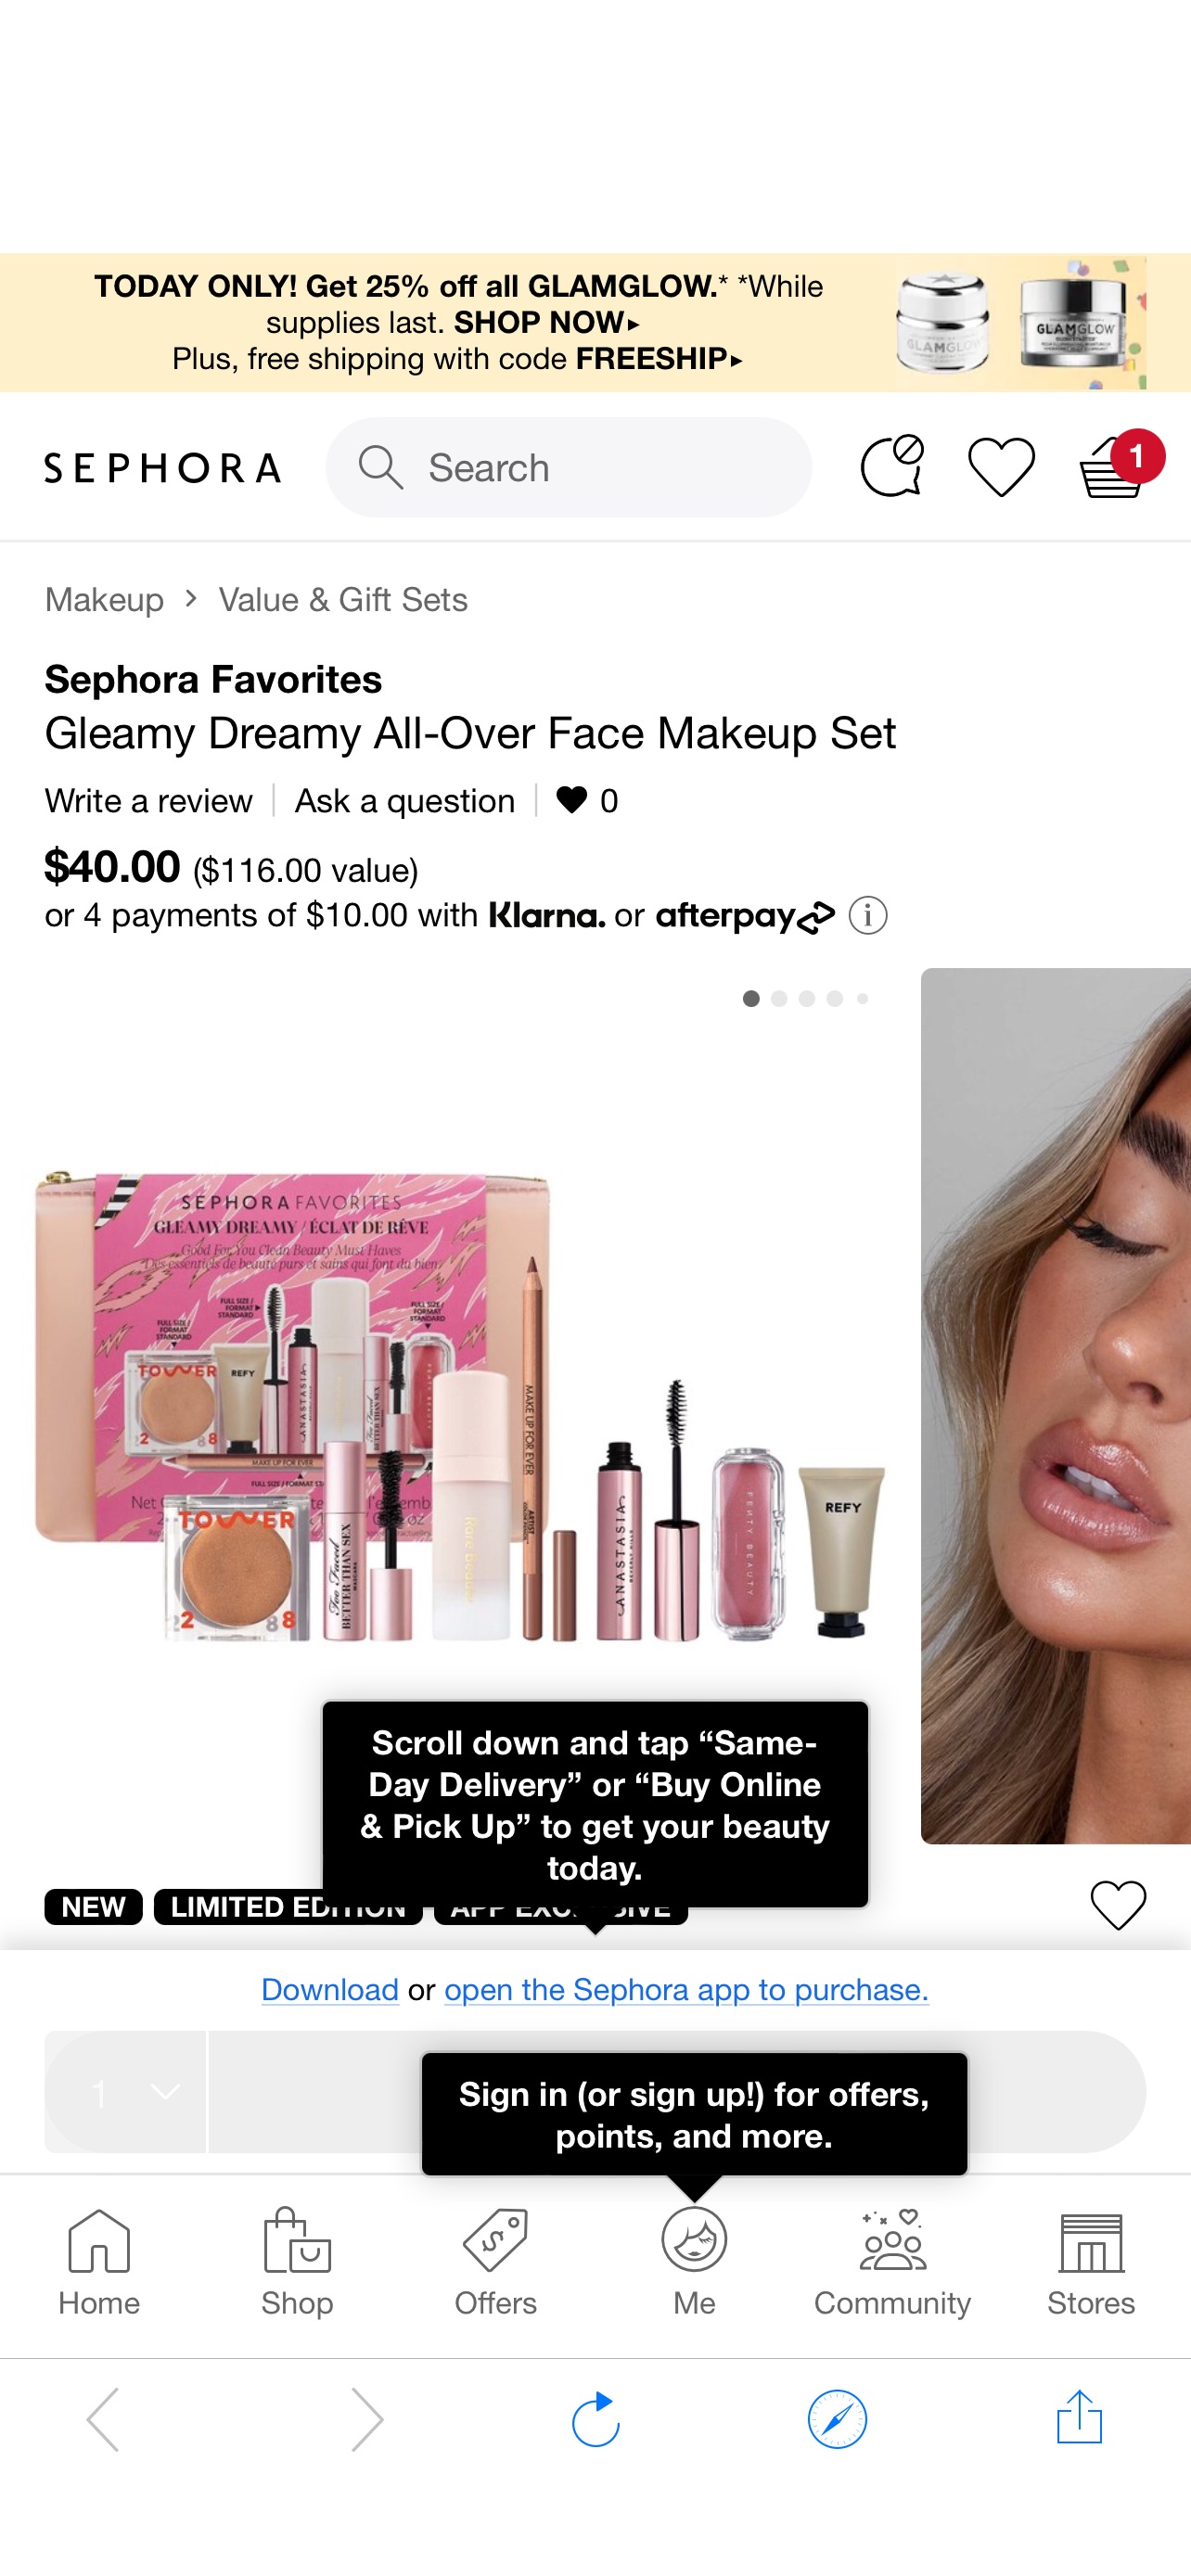 Gleamy Dreamy All-Over Face Makeup Set - Sephora Favorites彩妆套装上新